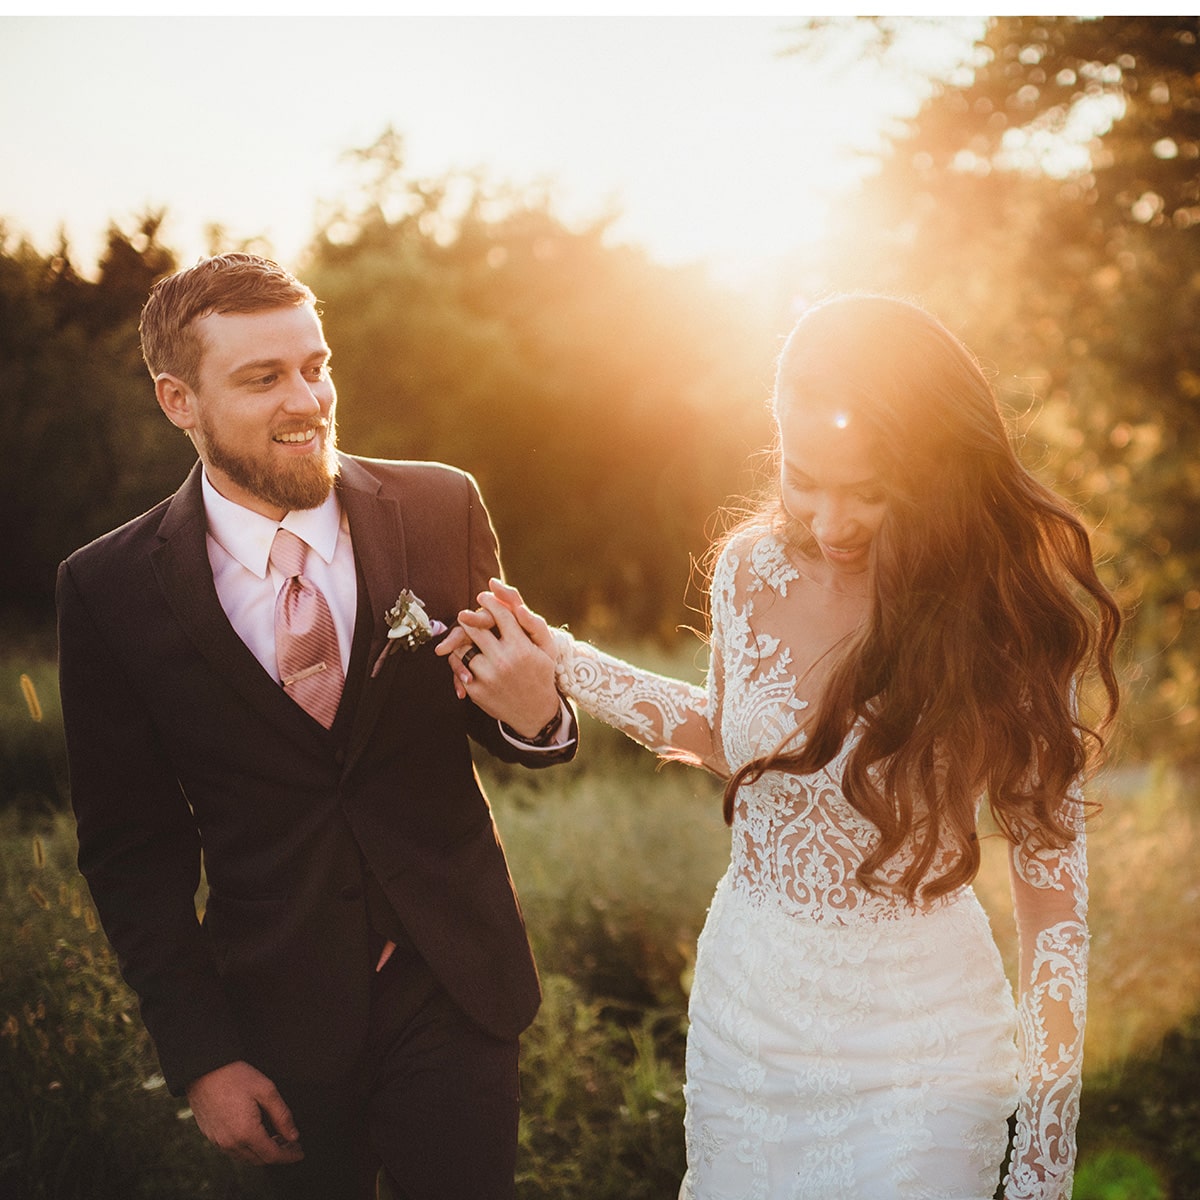 Wedding Poses for the Bride & Groom | Wedding Photos Tips by ZaraZoo